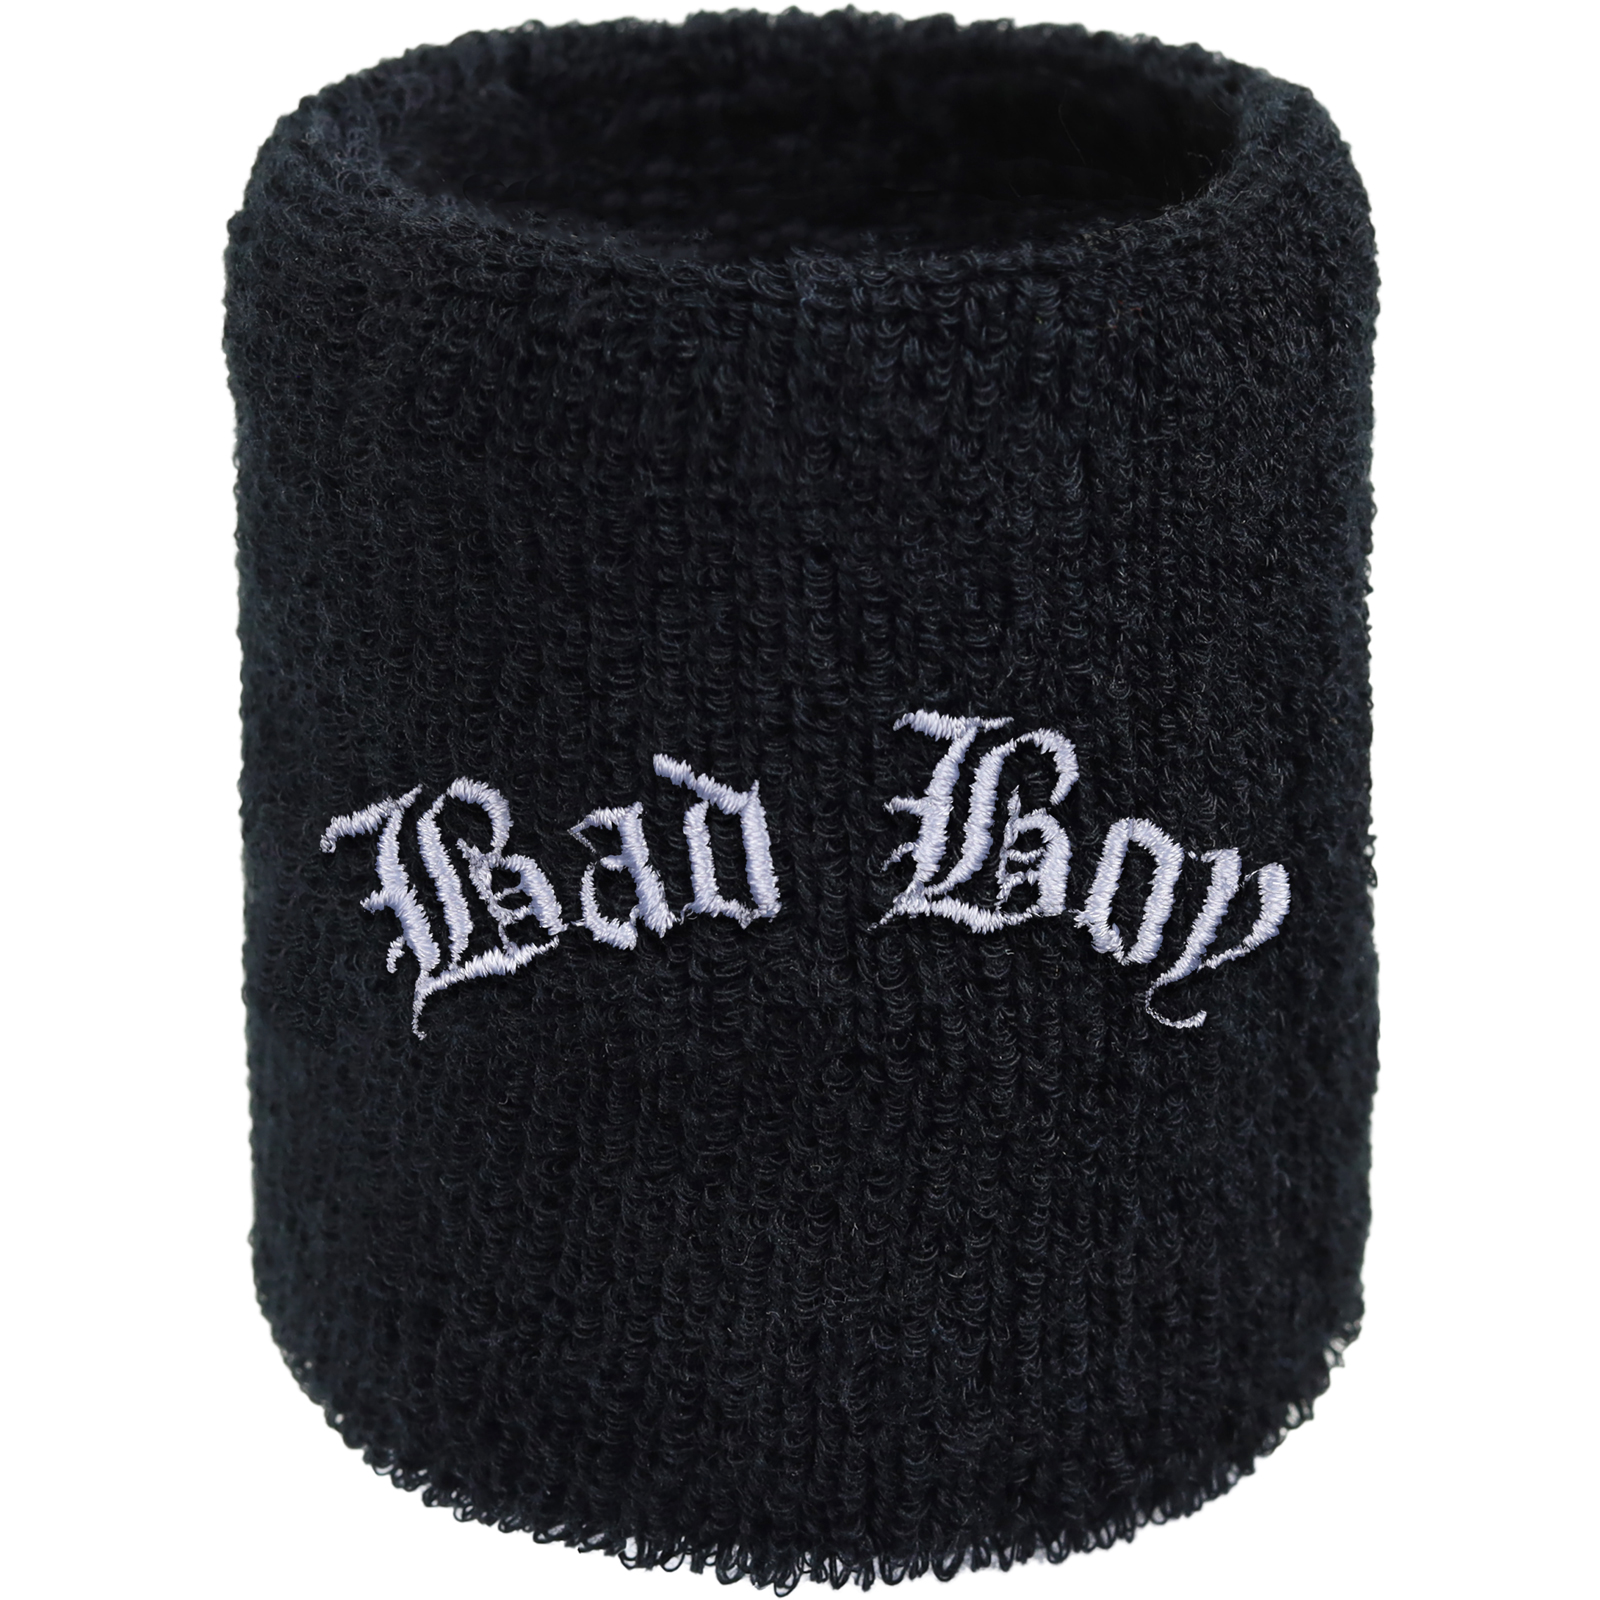 Bad Boy - Schweißband